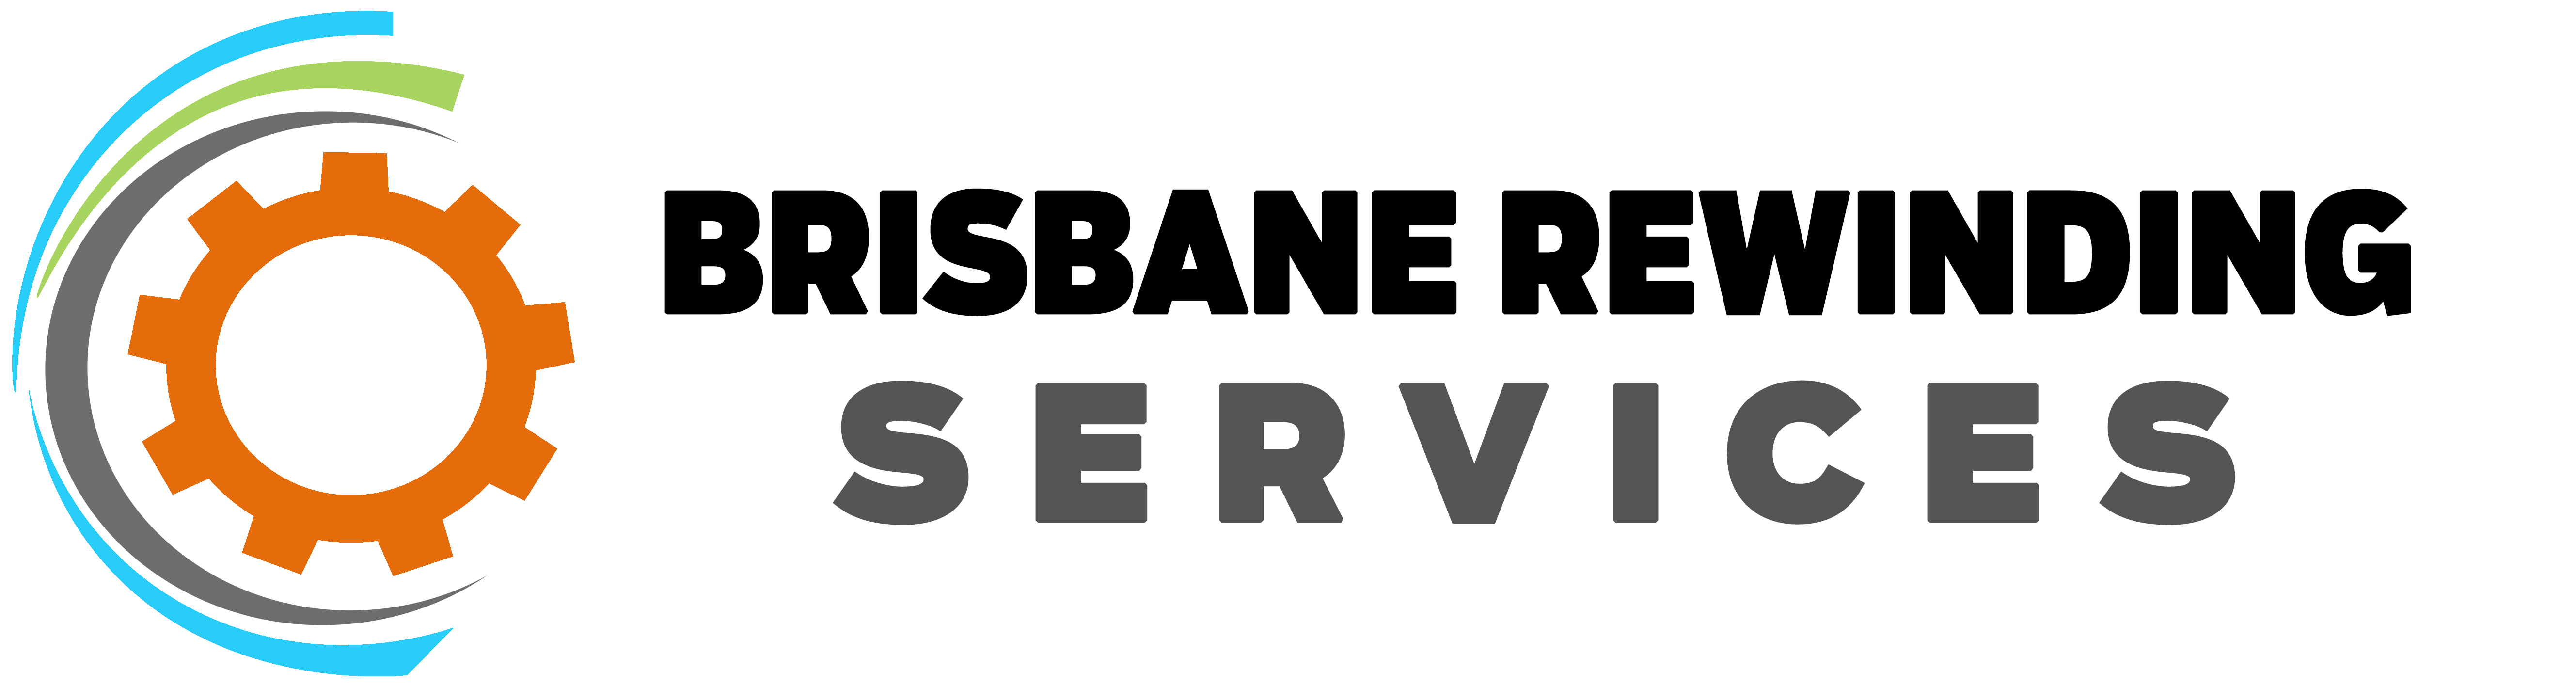 Brisbane Rewinding Service Stator Motor Coil Armature Rebuilding Rewinding Repair